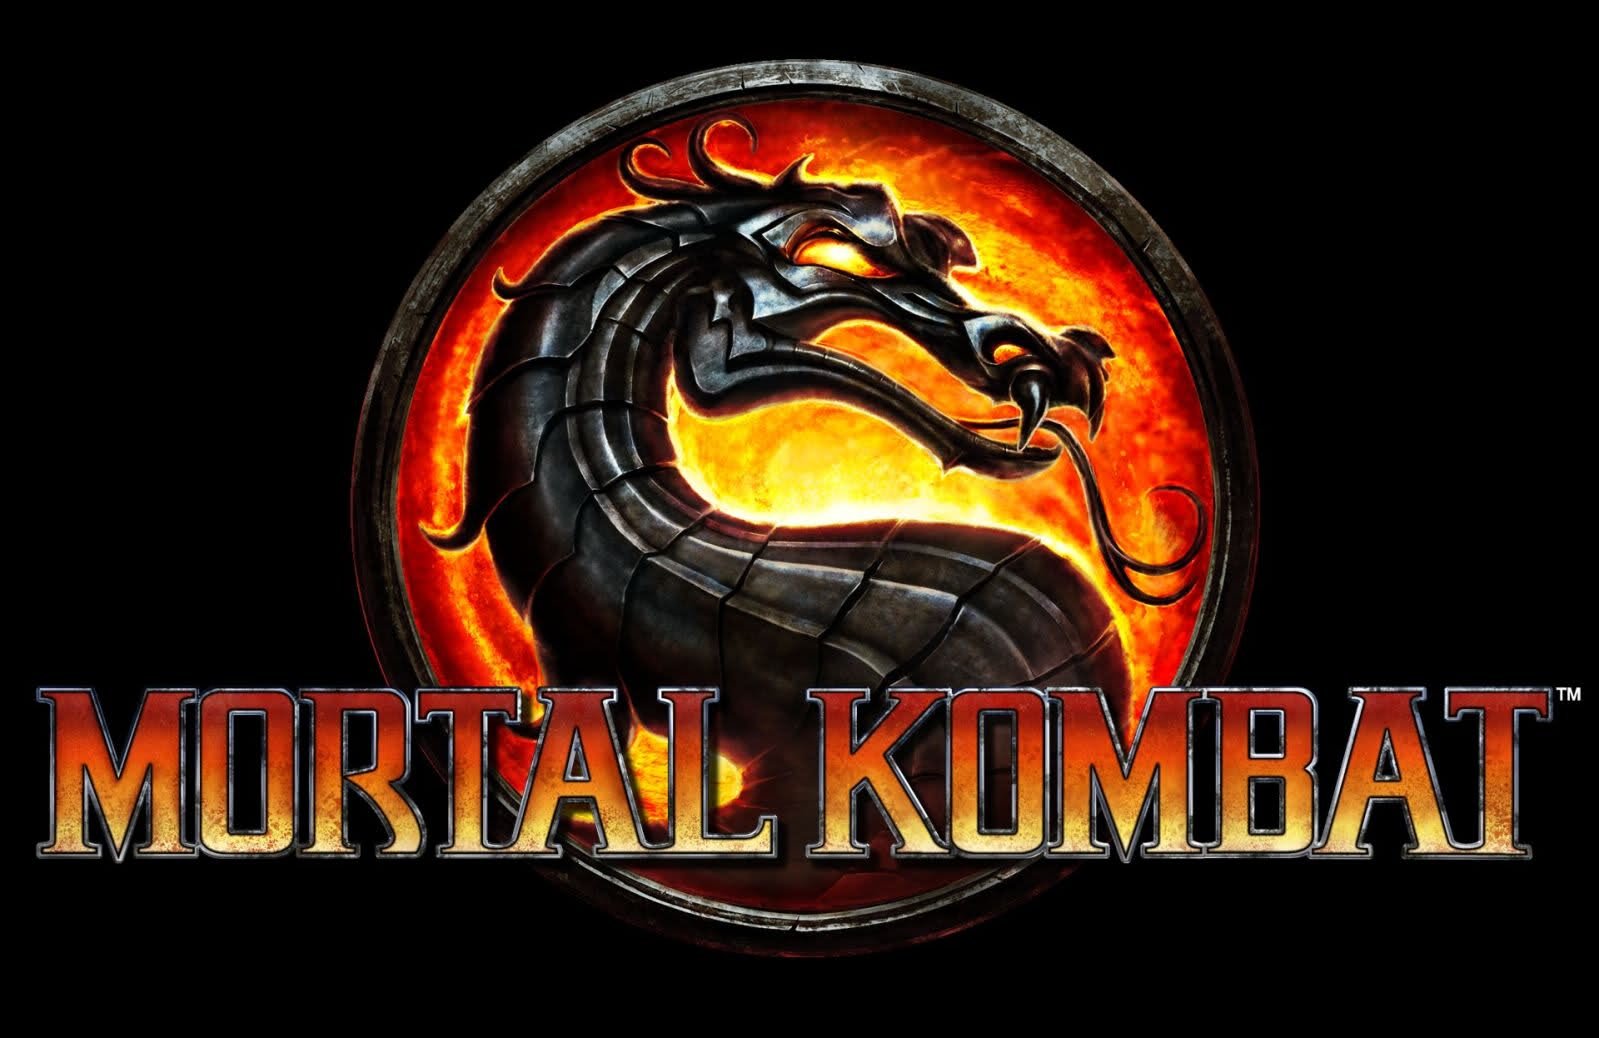 New Marvel Character Version Of Mortal Kombat Coming?